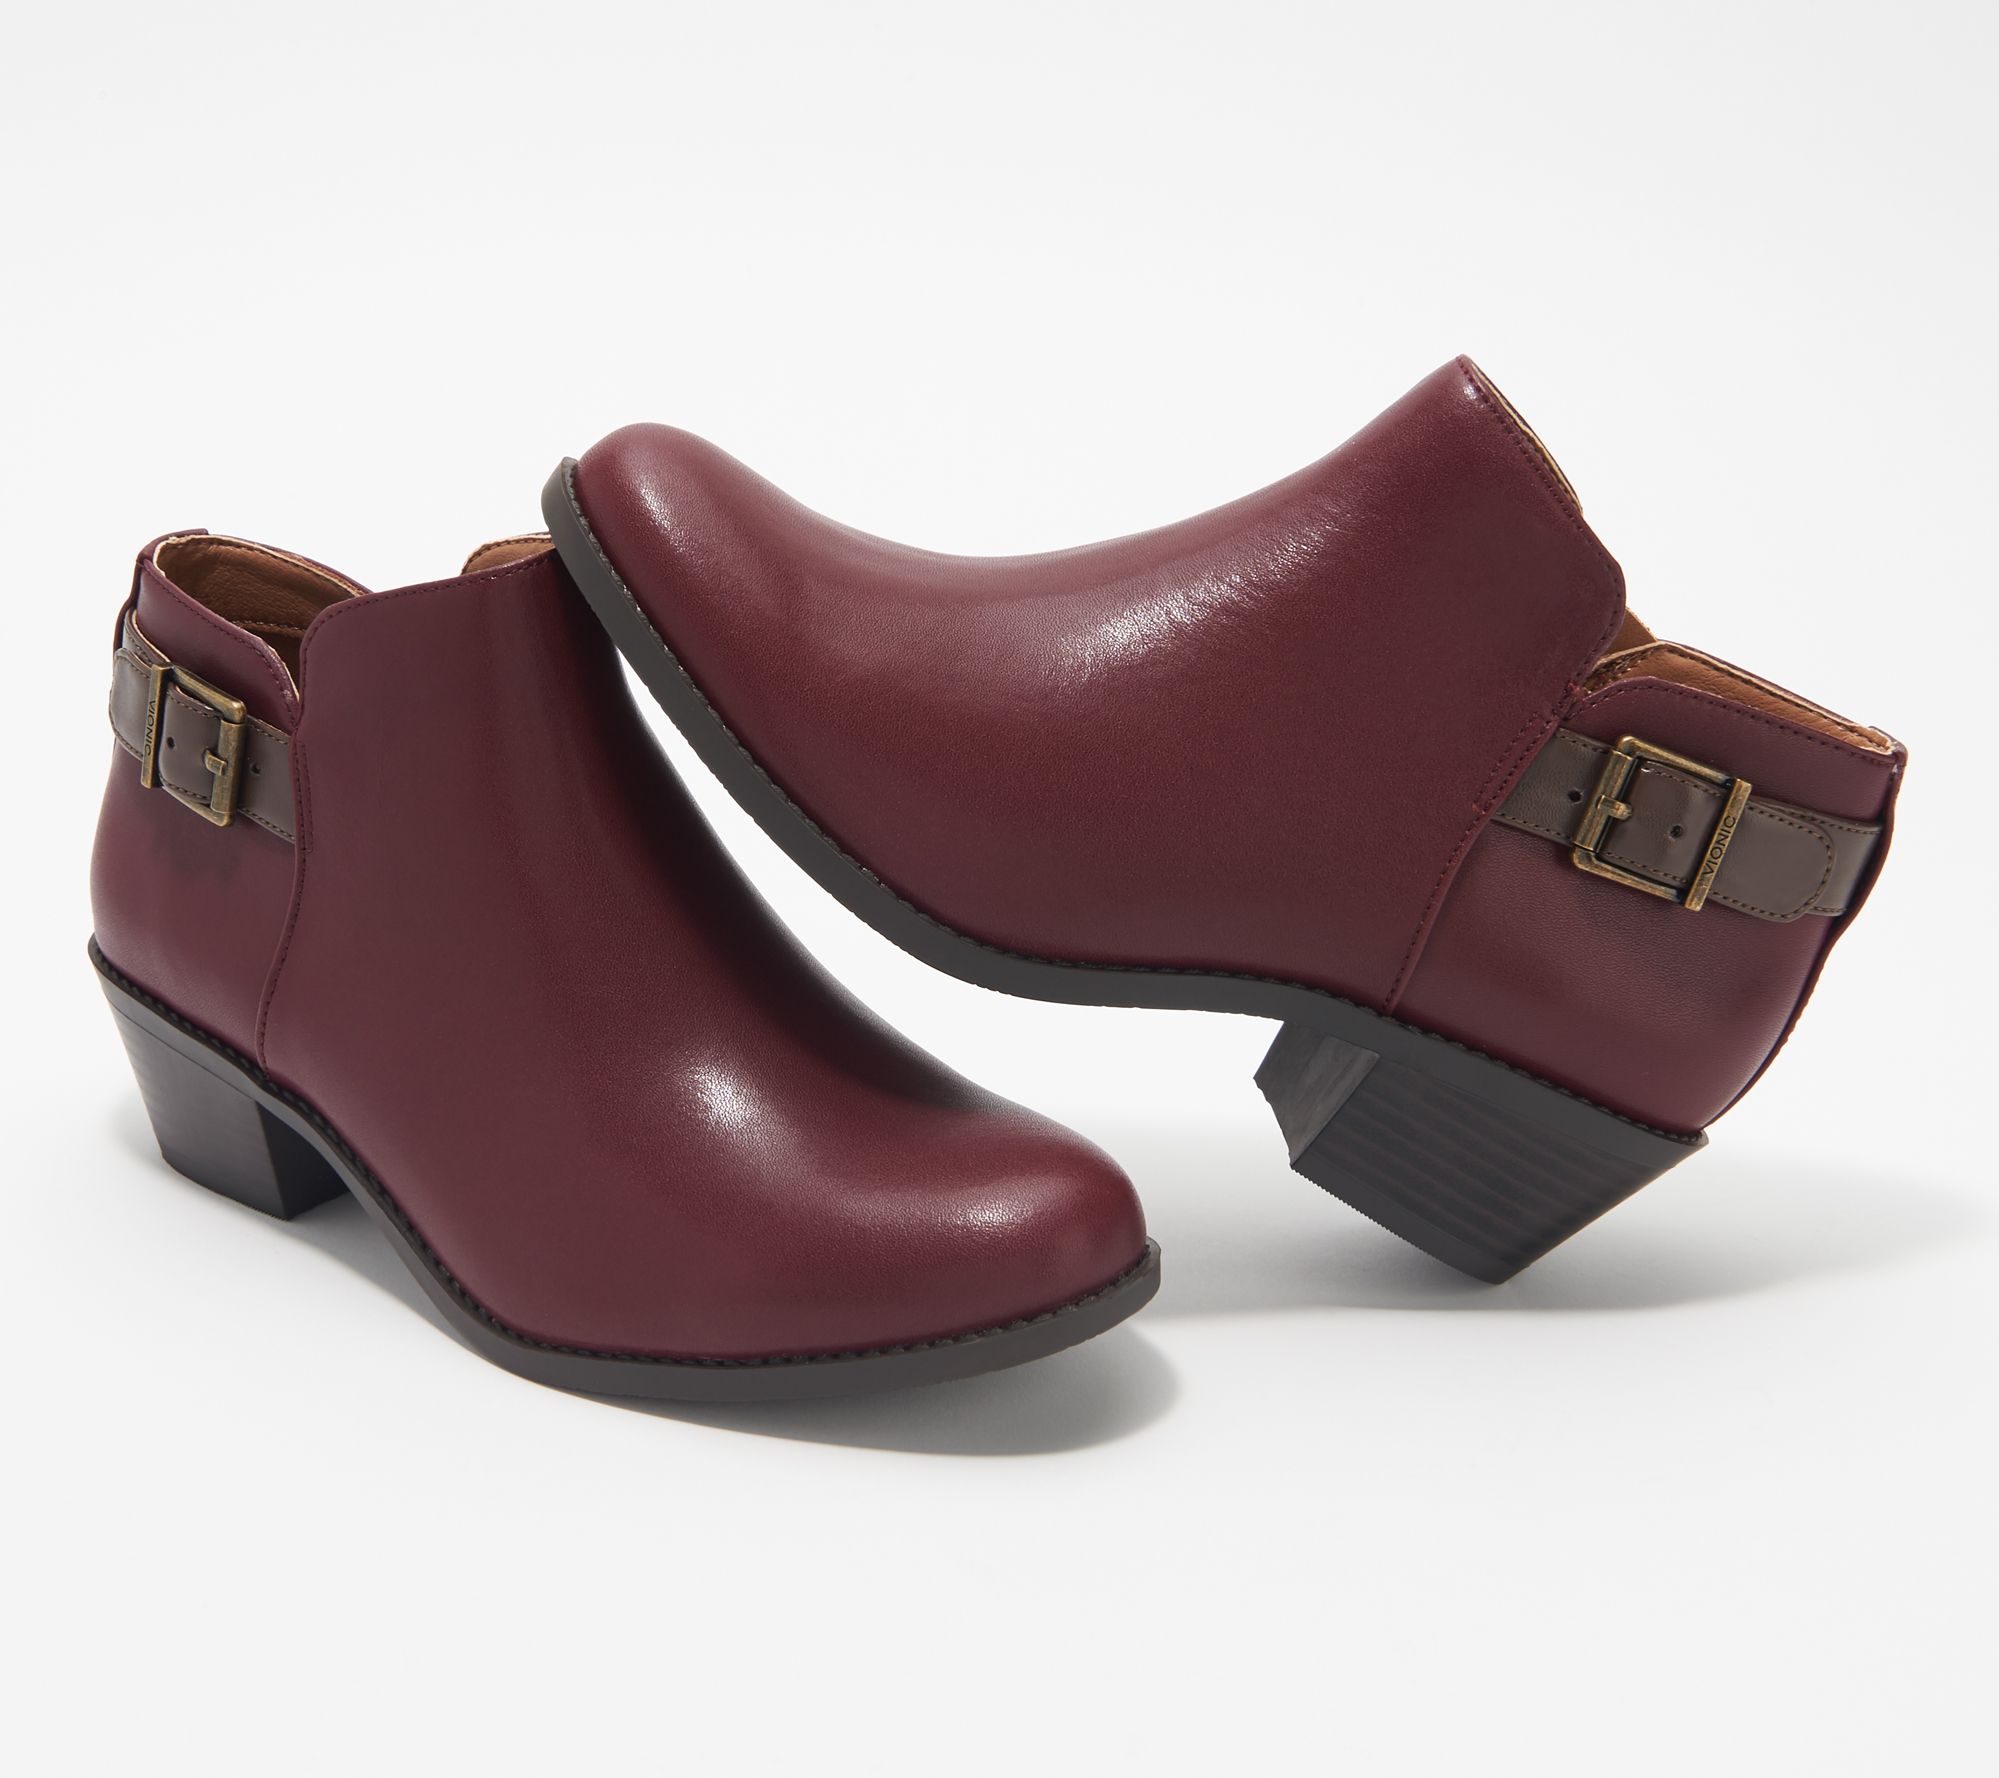 vionic orthaheel boots